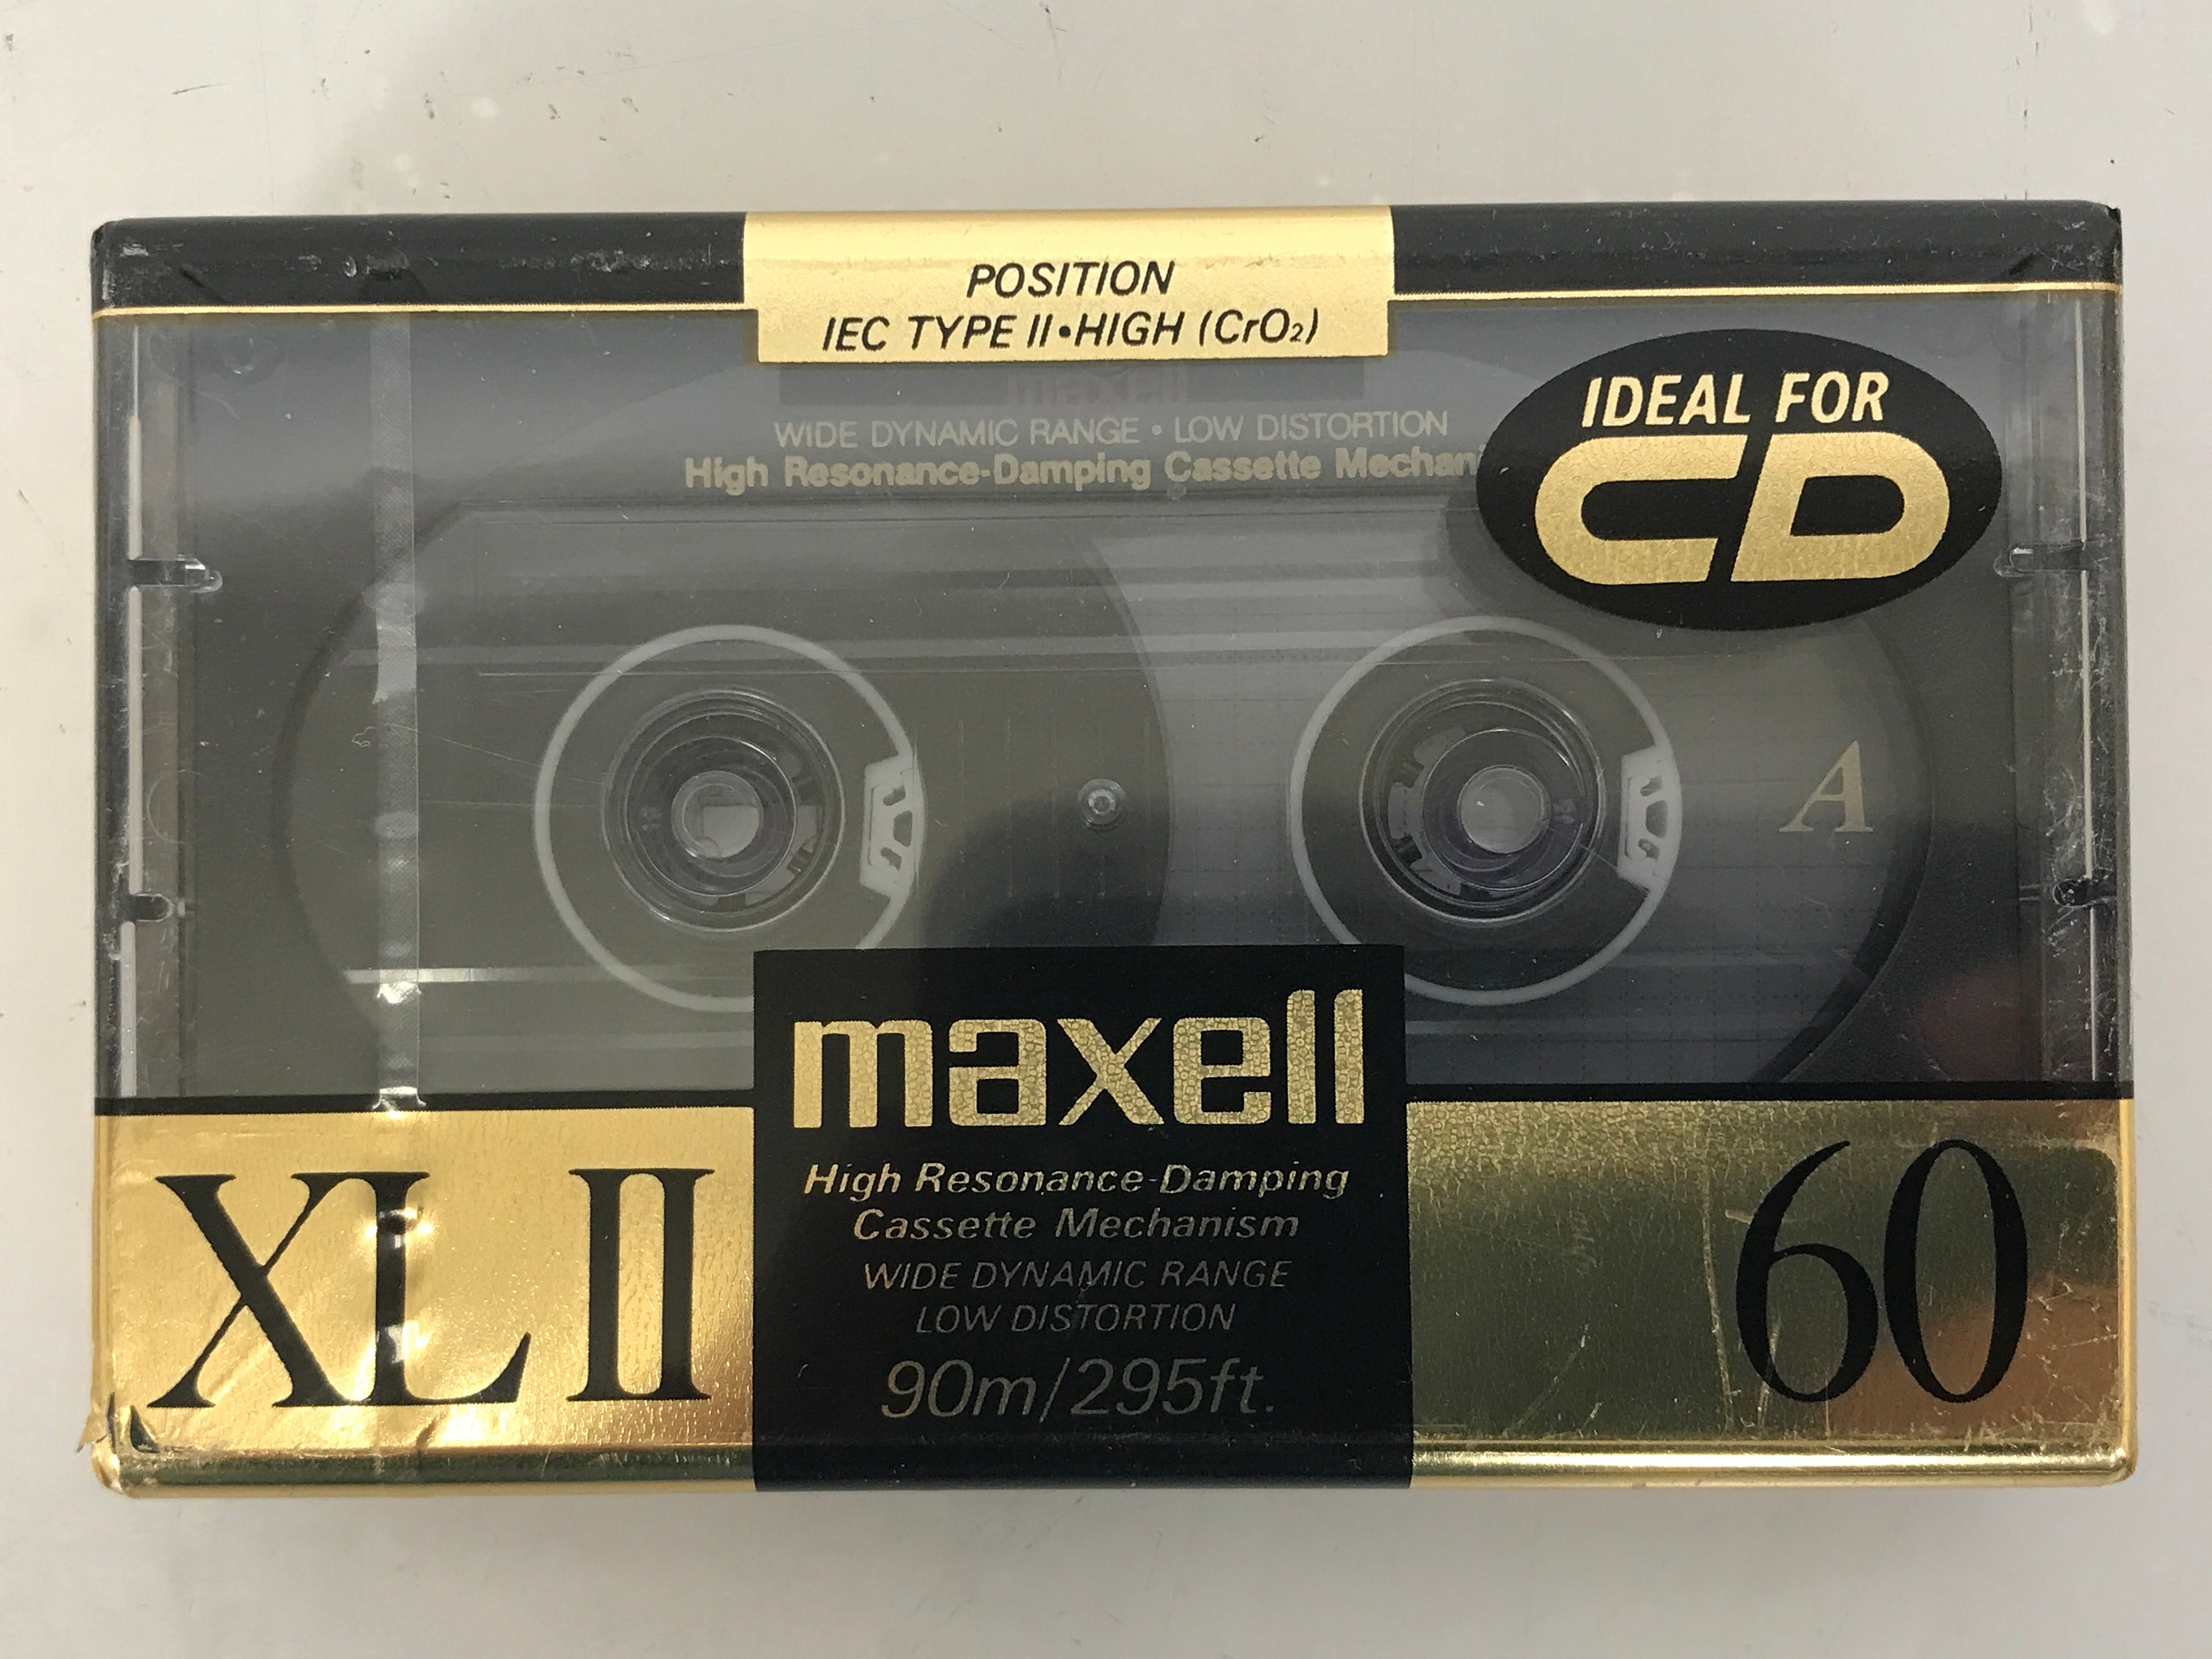 Maxell XLII-S - 2000 - EU - Blank Cassette Tape - New Sealed